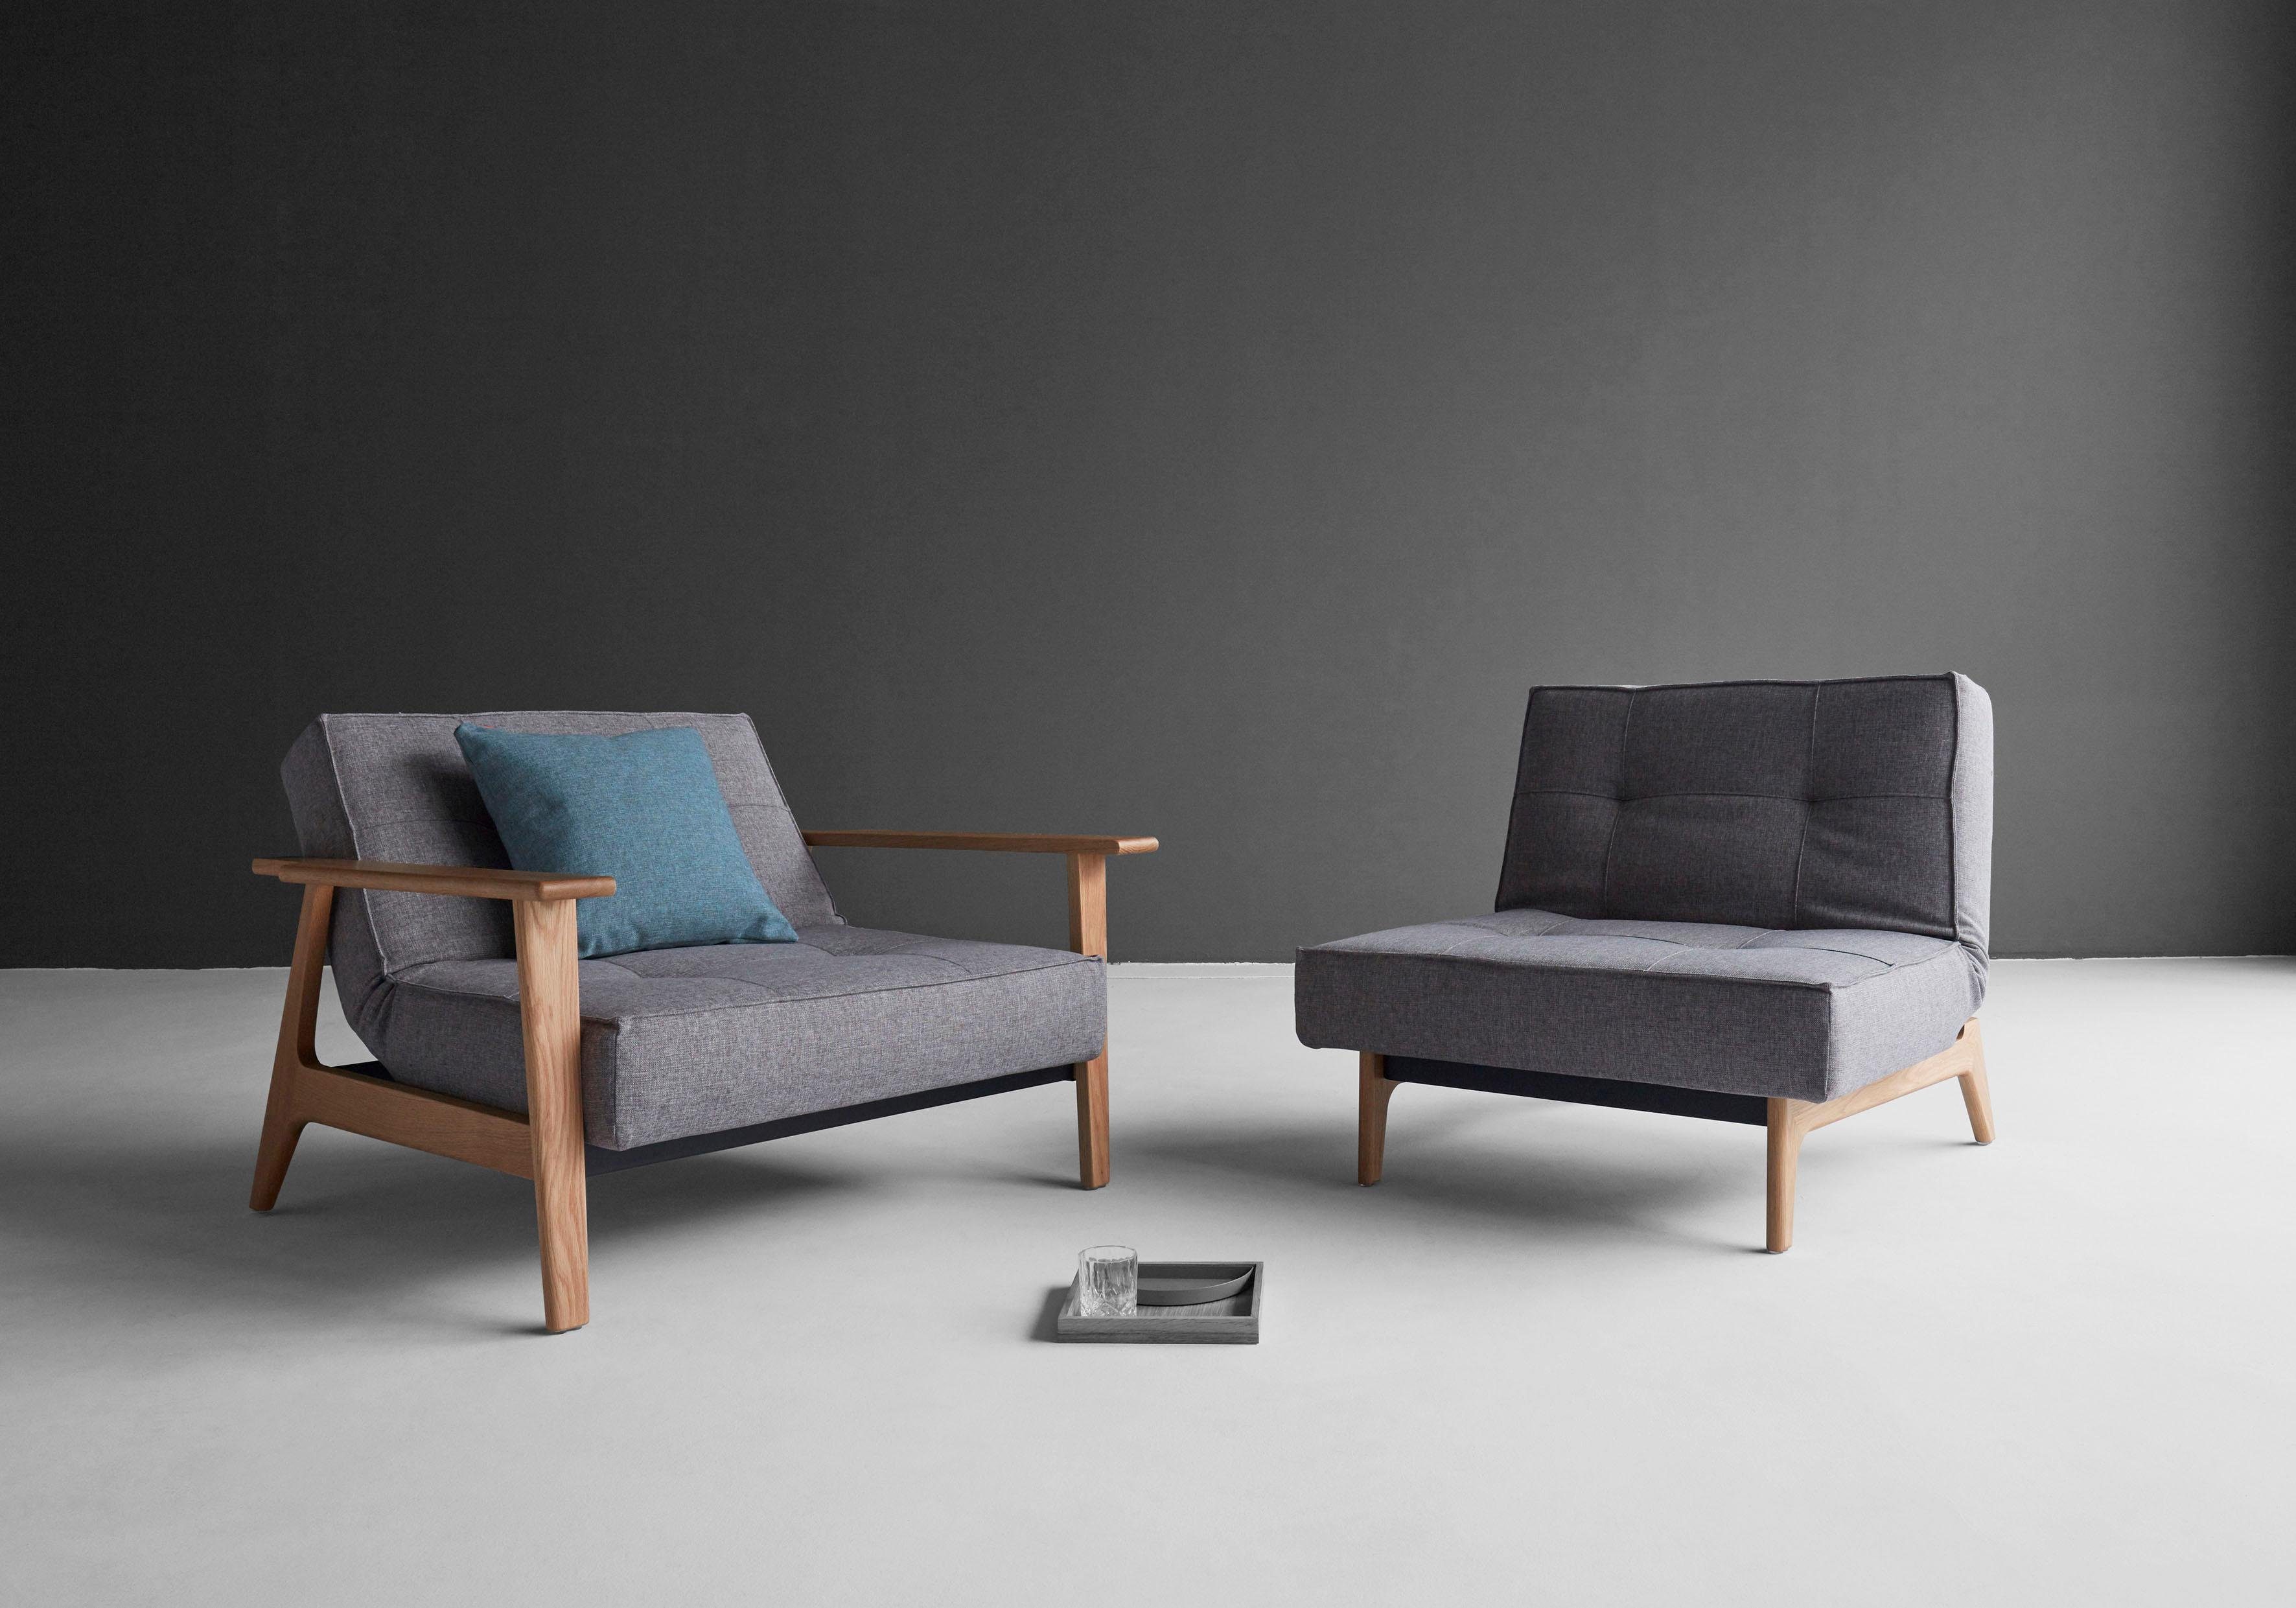 INNOVATION LIVING ™ Sessel mit Eiche, in Design Arm, skandinavischen Frej Splitback, in